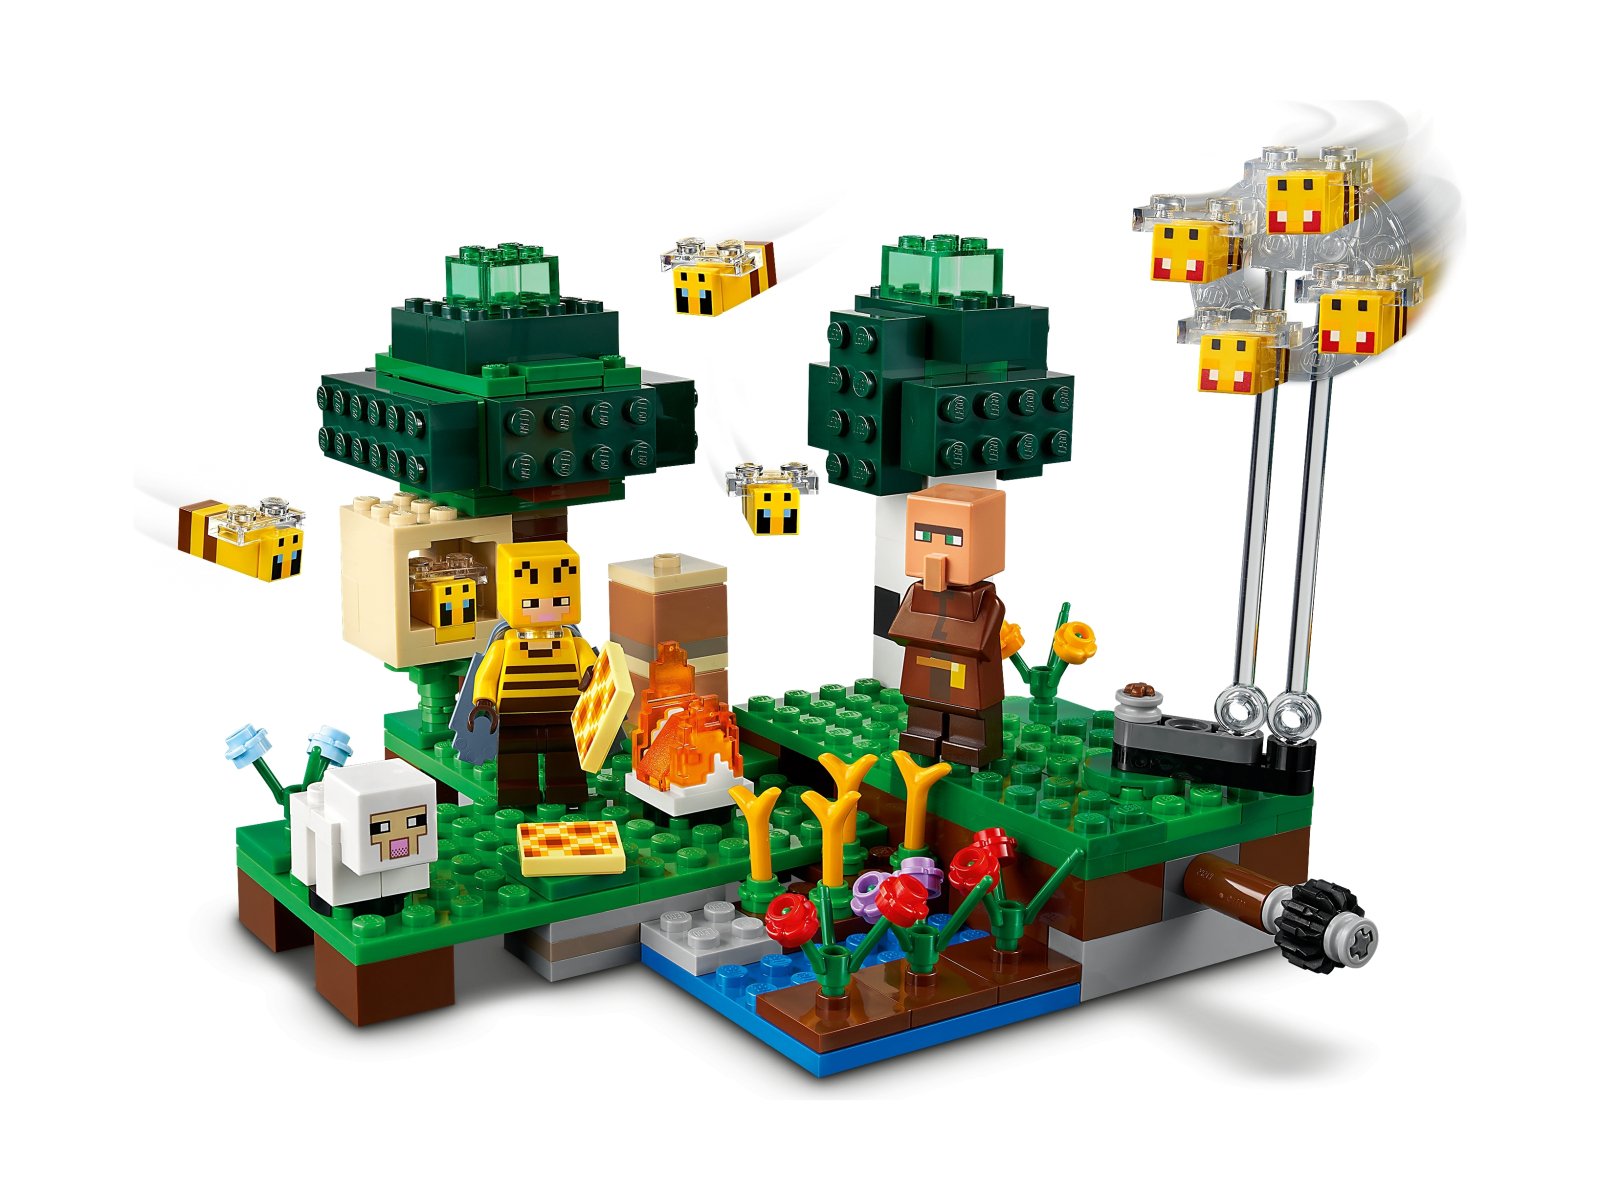 LEGO Minecraft 21165 Pasieka